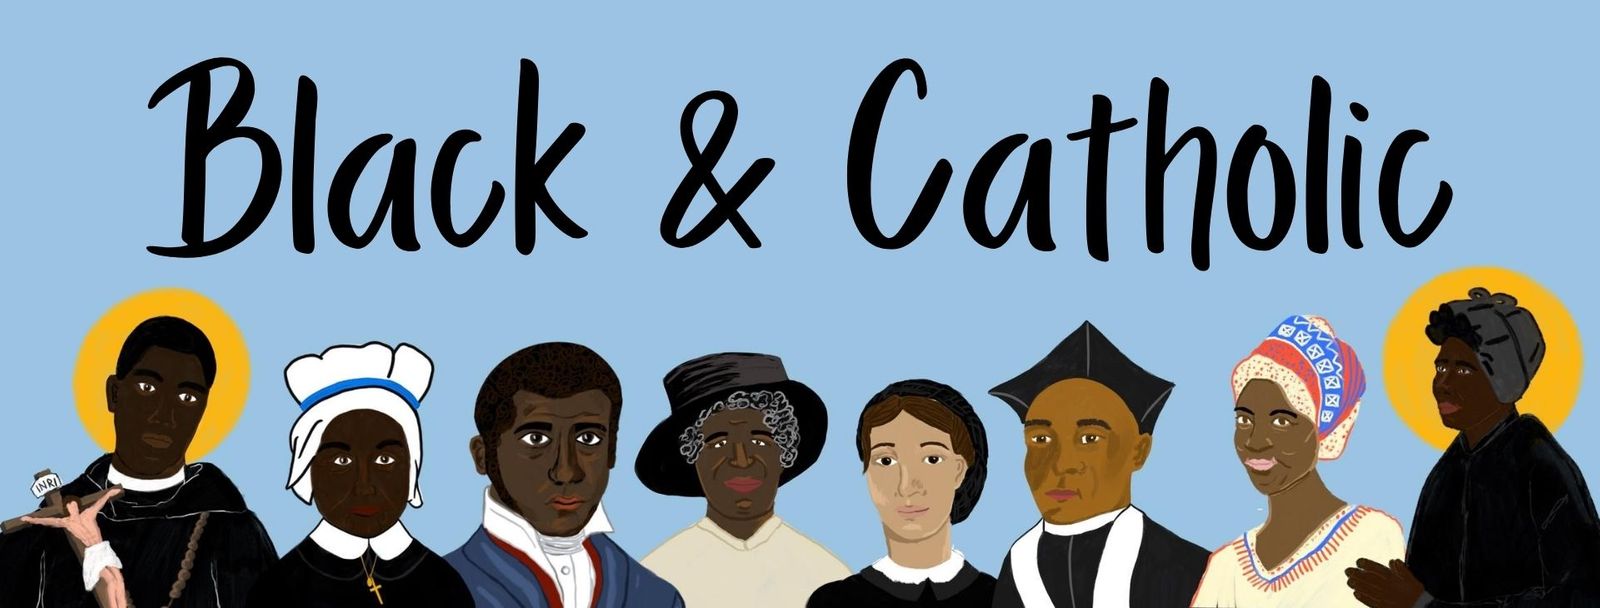 Largest Facebook group for Black Catholics hosts gathering for Black Catholic History Month